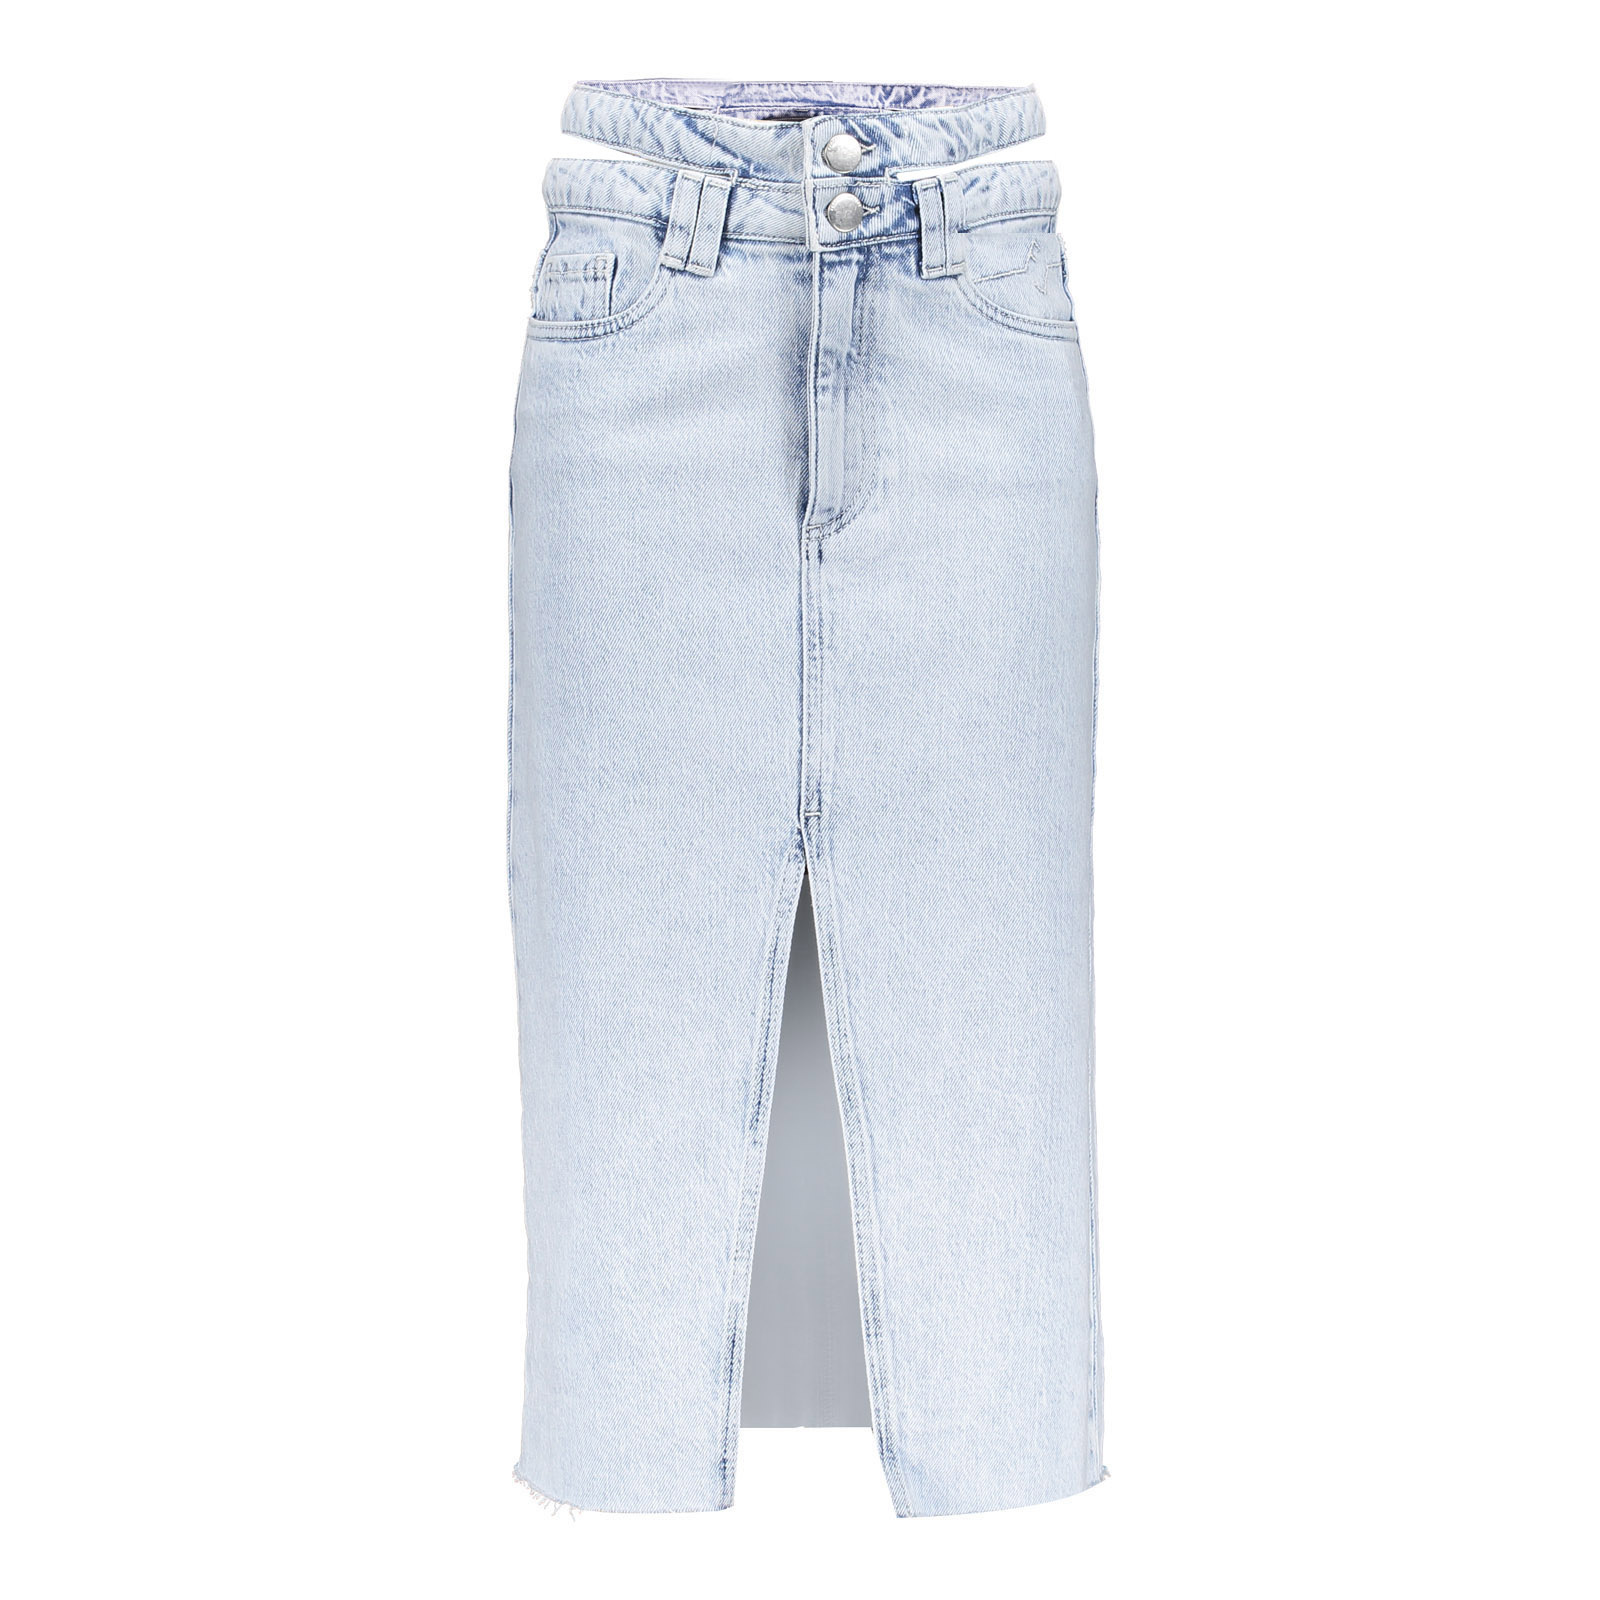 Meisjes jeans rok - Maxi - Ijs blauw denim